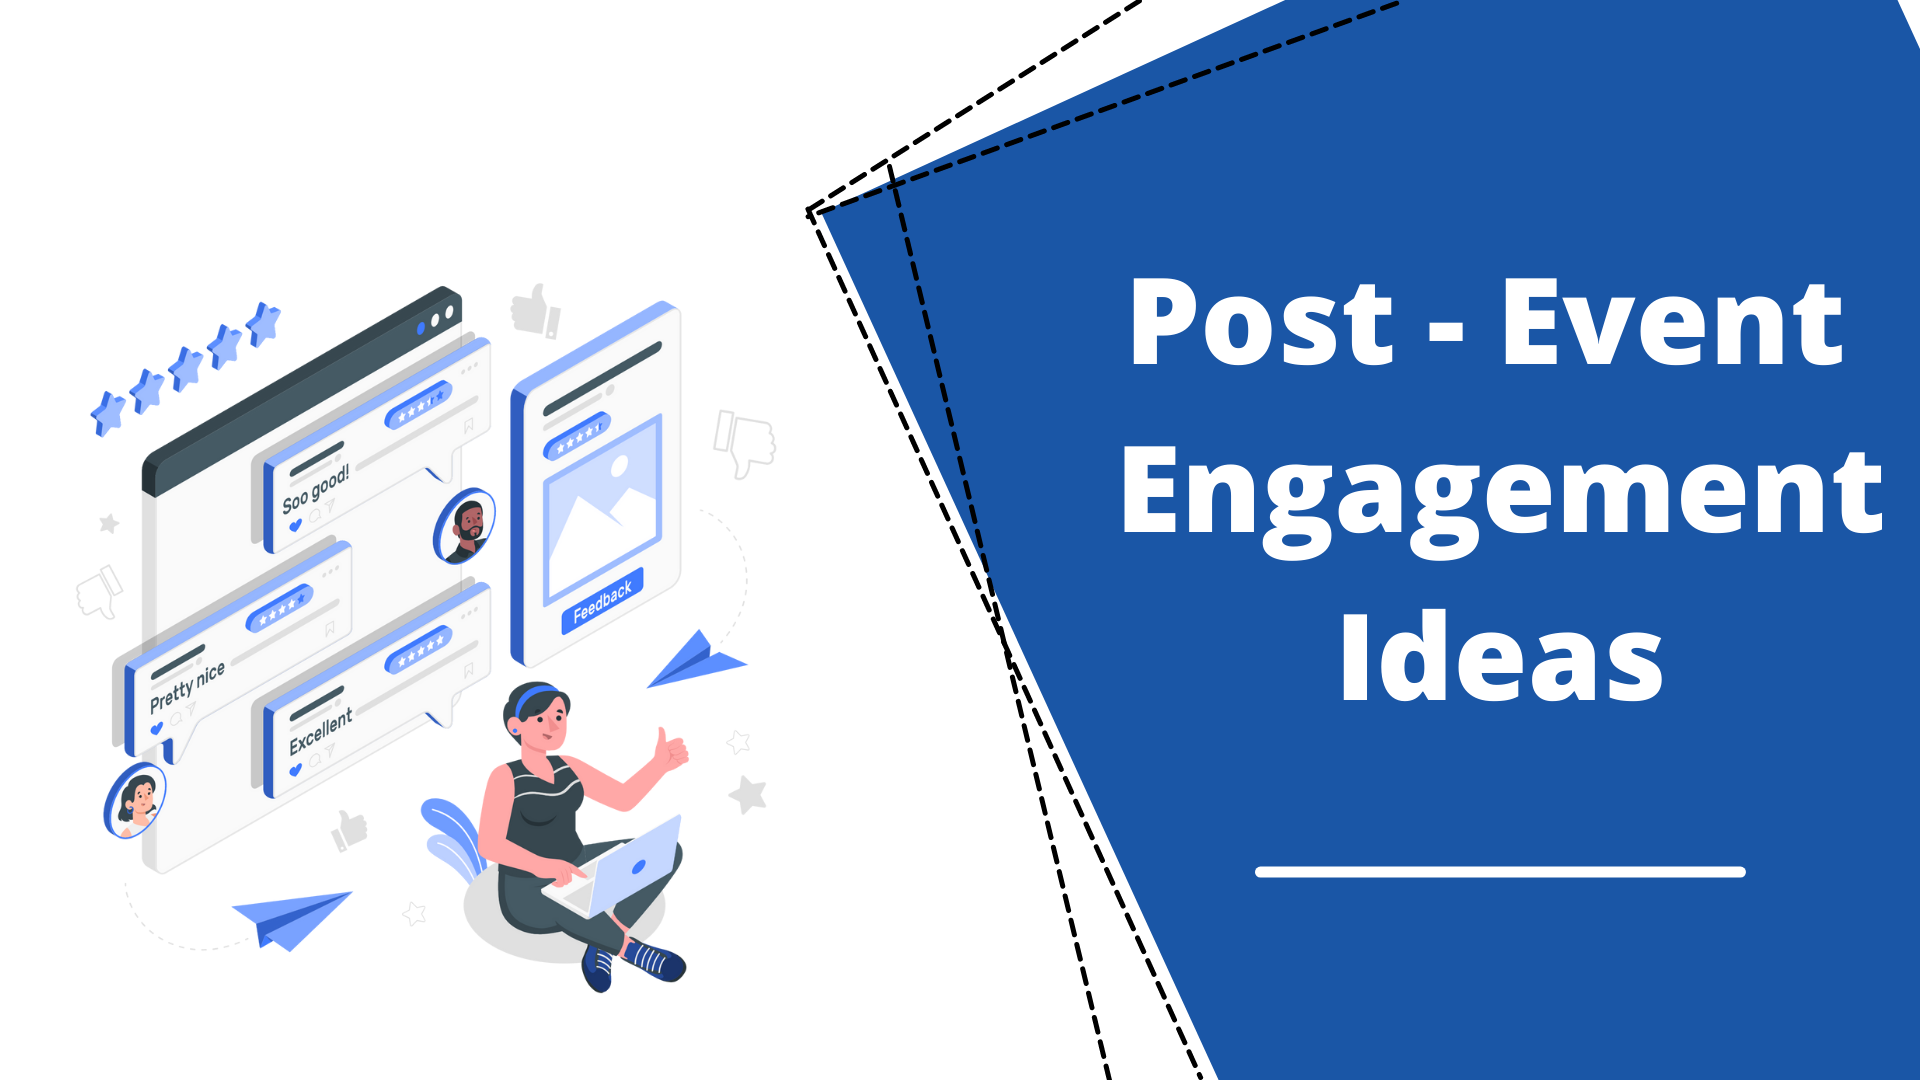 Post event engagement ideas